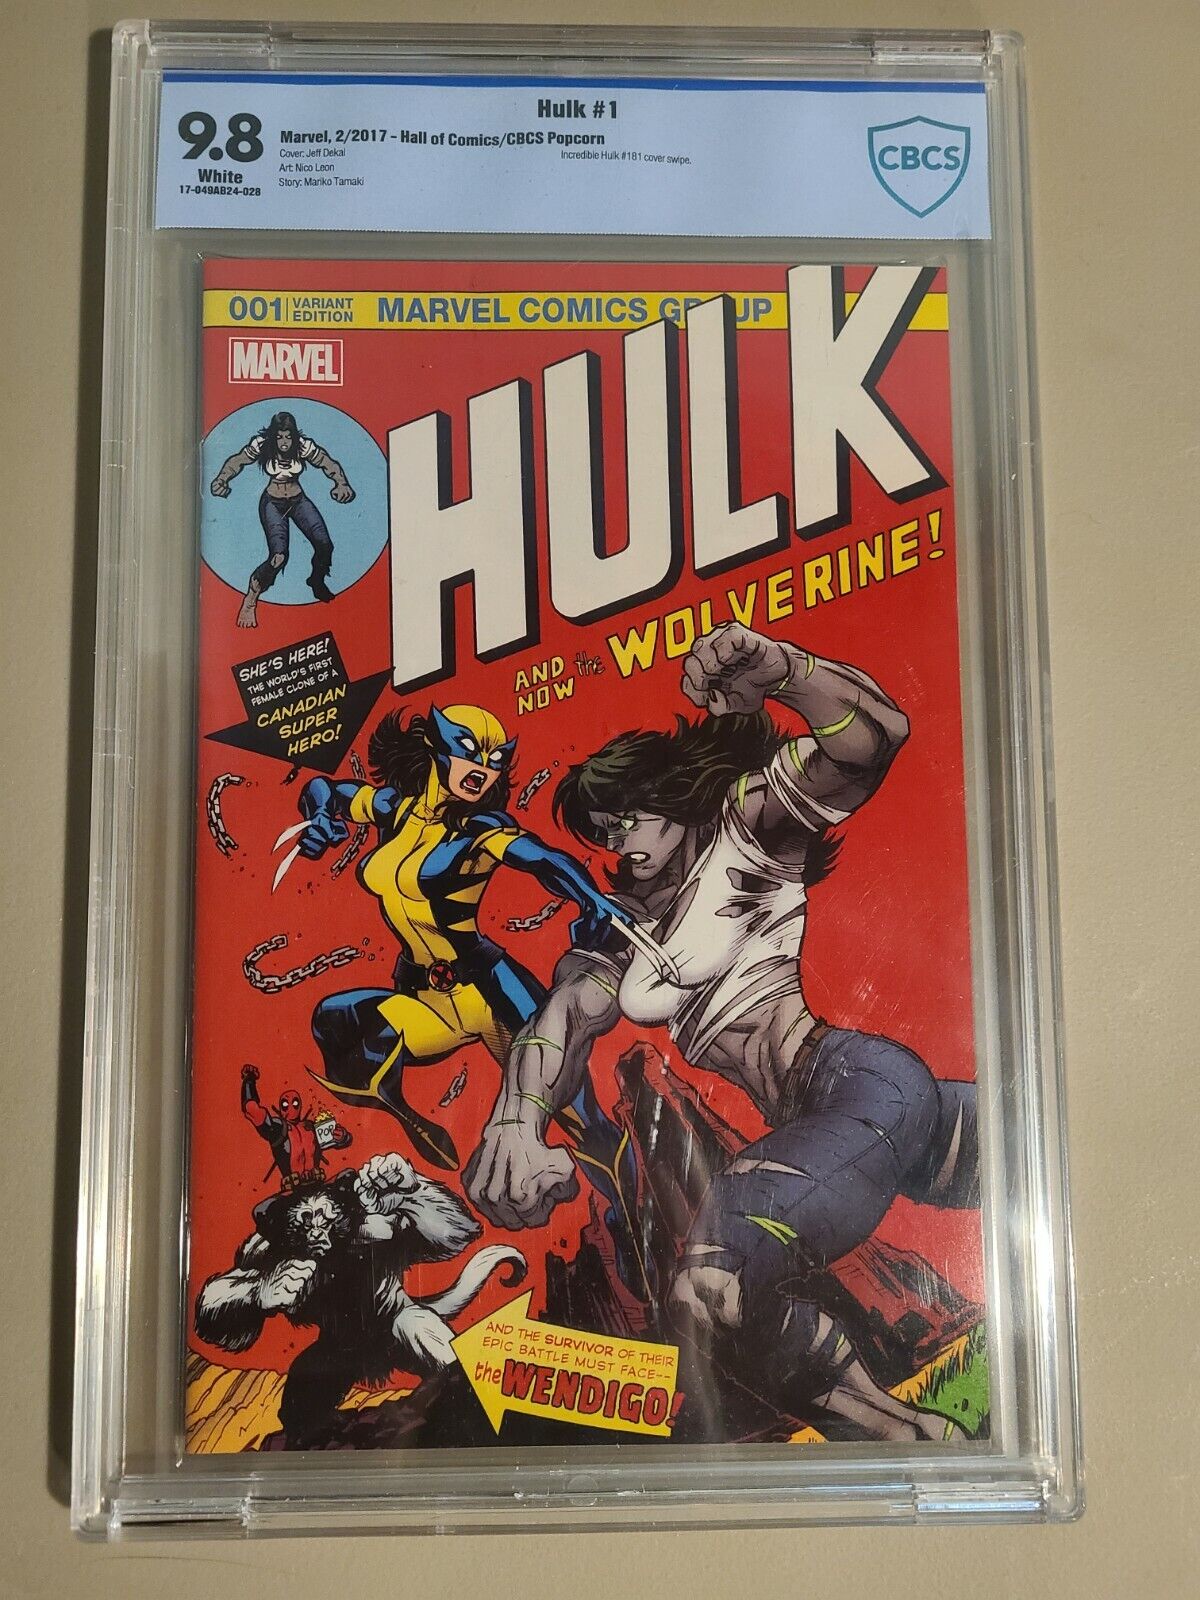 Hulk #1 - Hall of Comics / CBCS Popcorn Variant - CBCS 9.8 